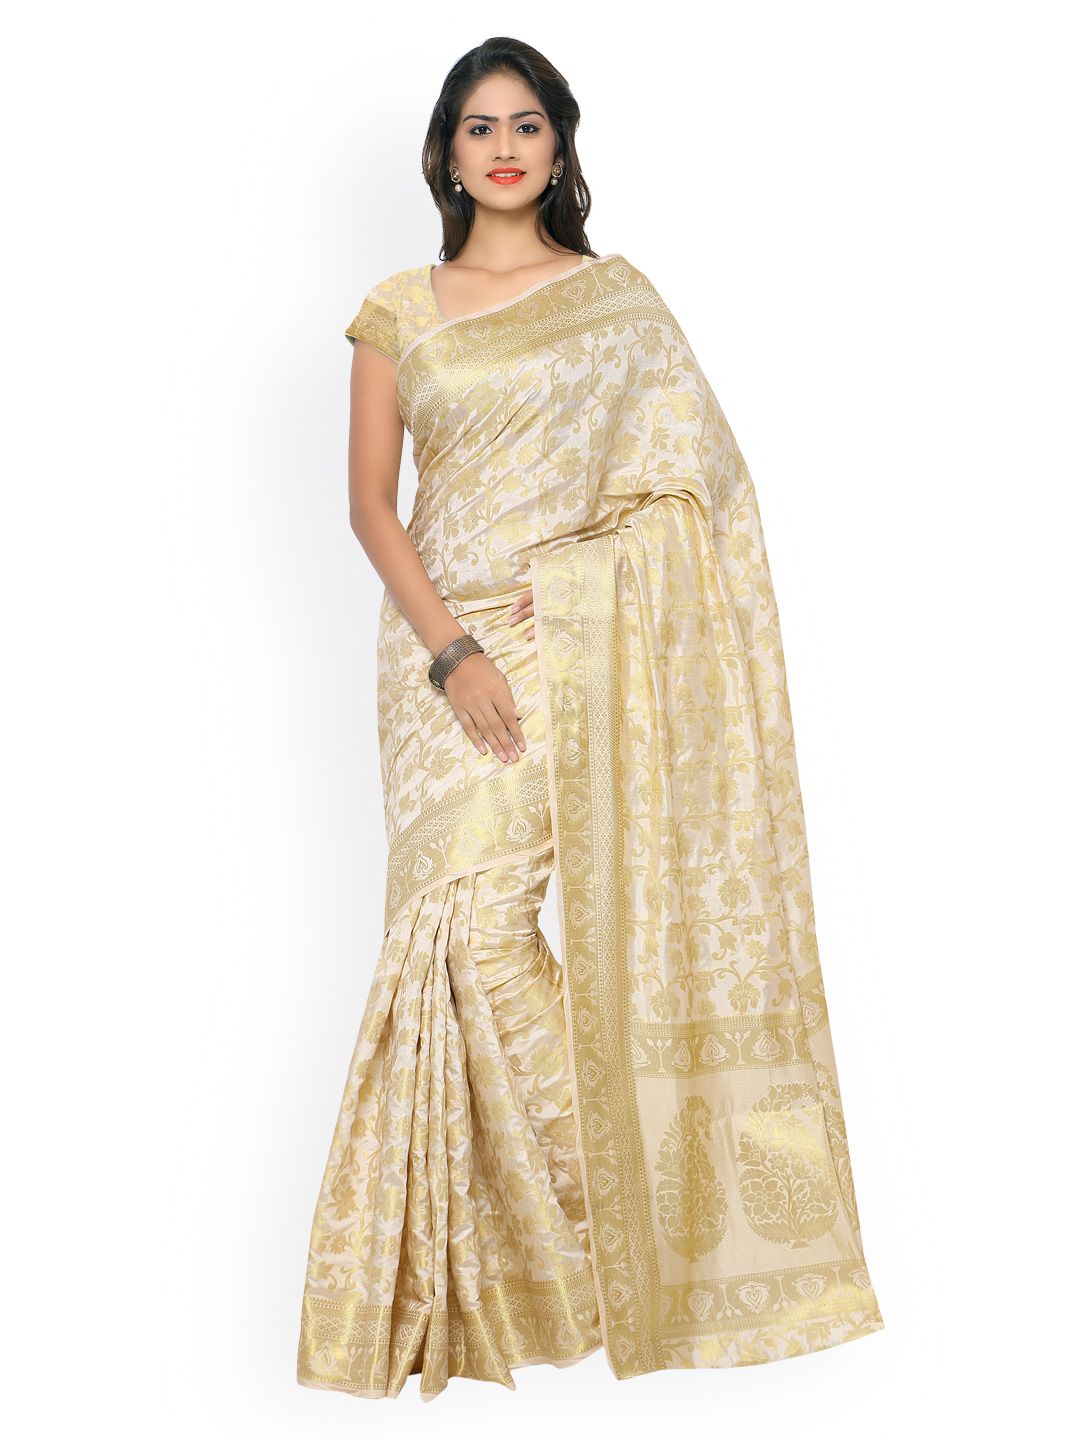 Varkala Silk Sarees Cream-Coloured Kanjeevaram Tussar Silk Traditional Saree Price in India